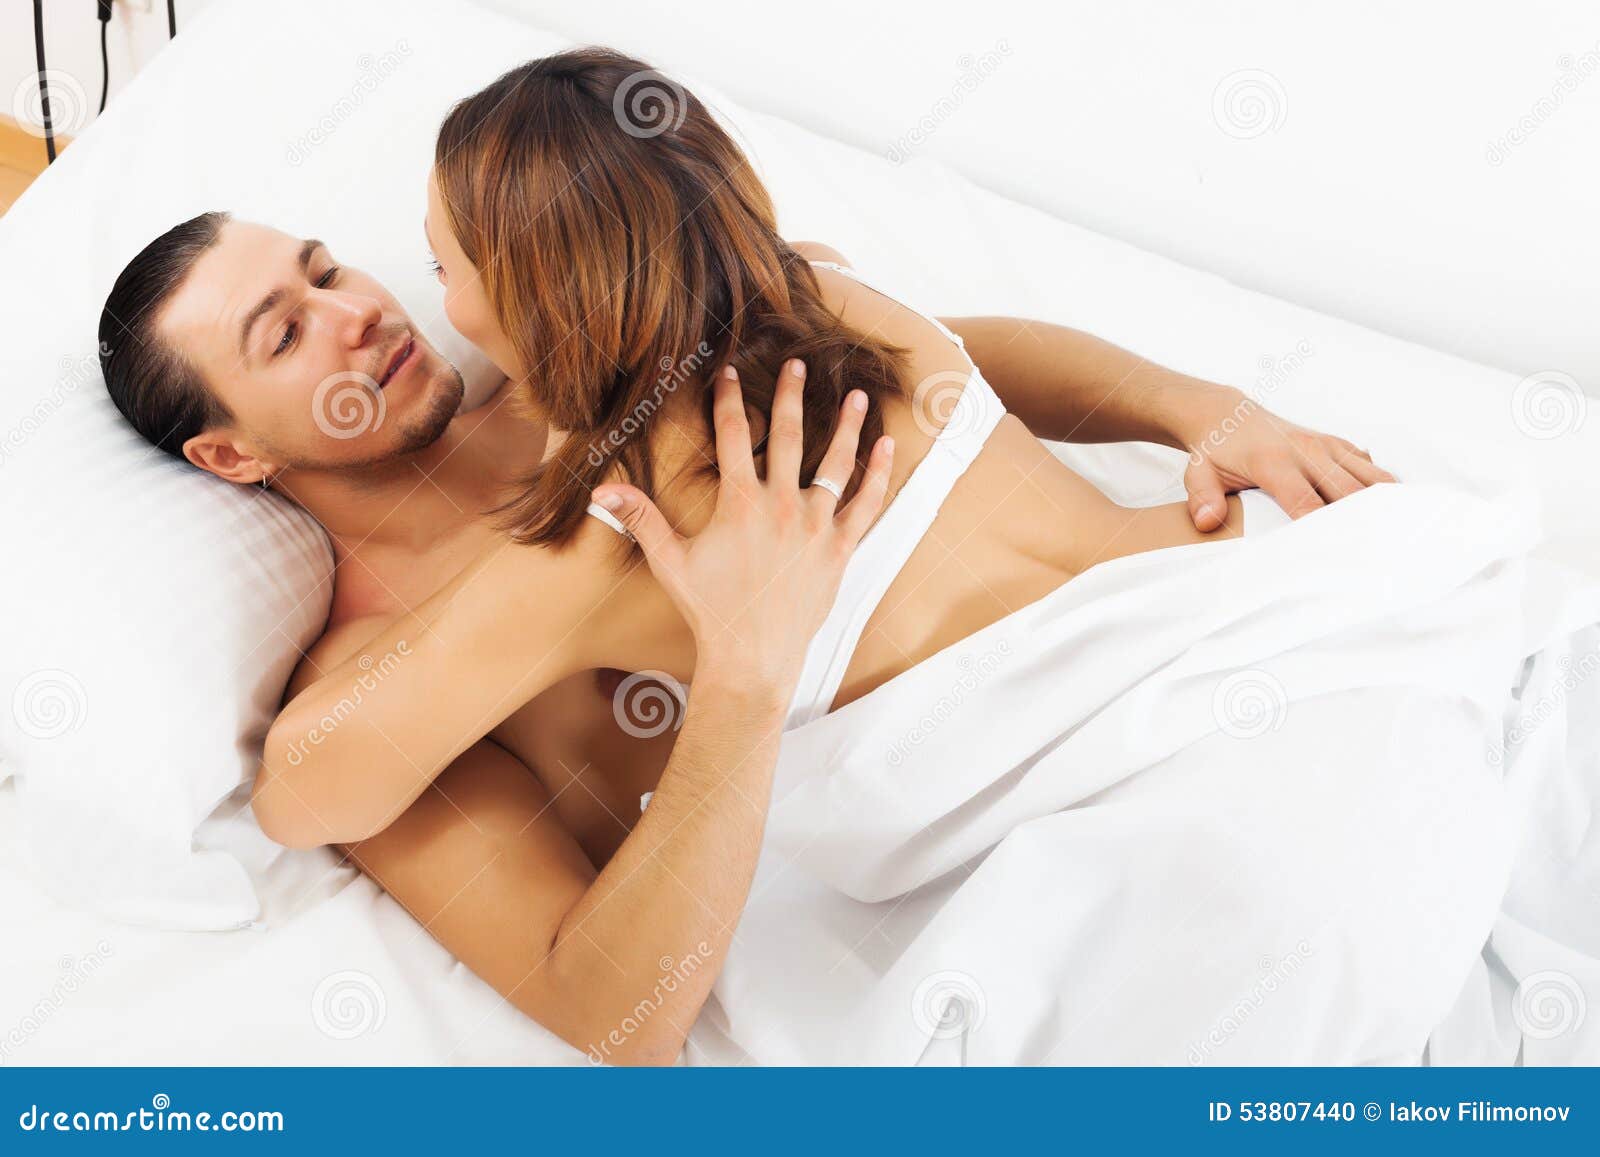 darlene radloff add man and woman in bed making love photo